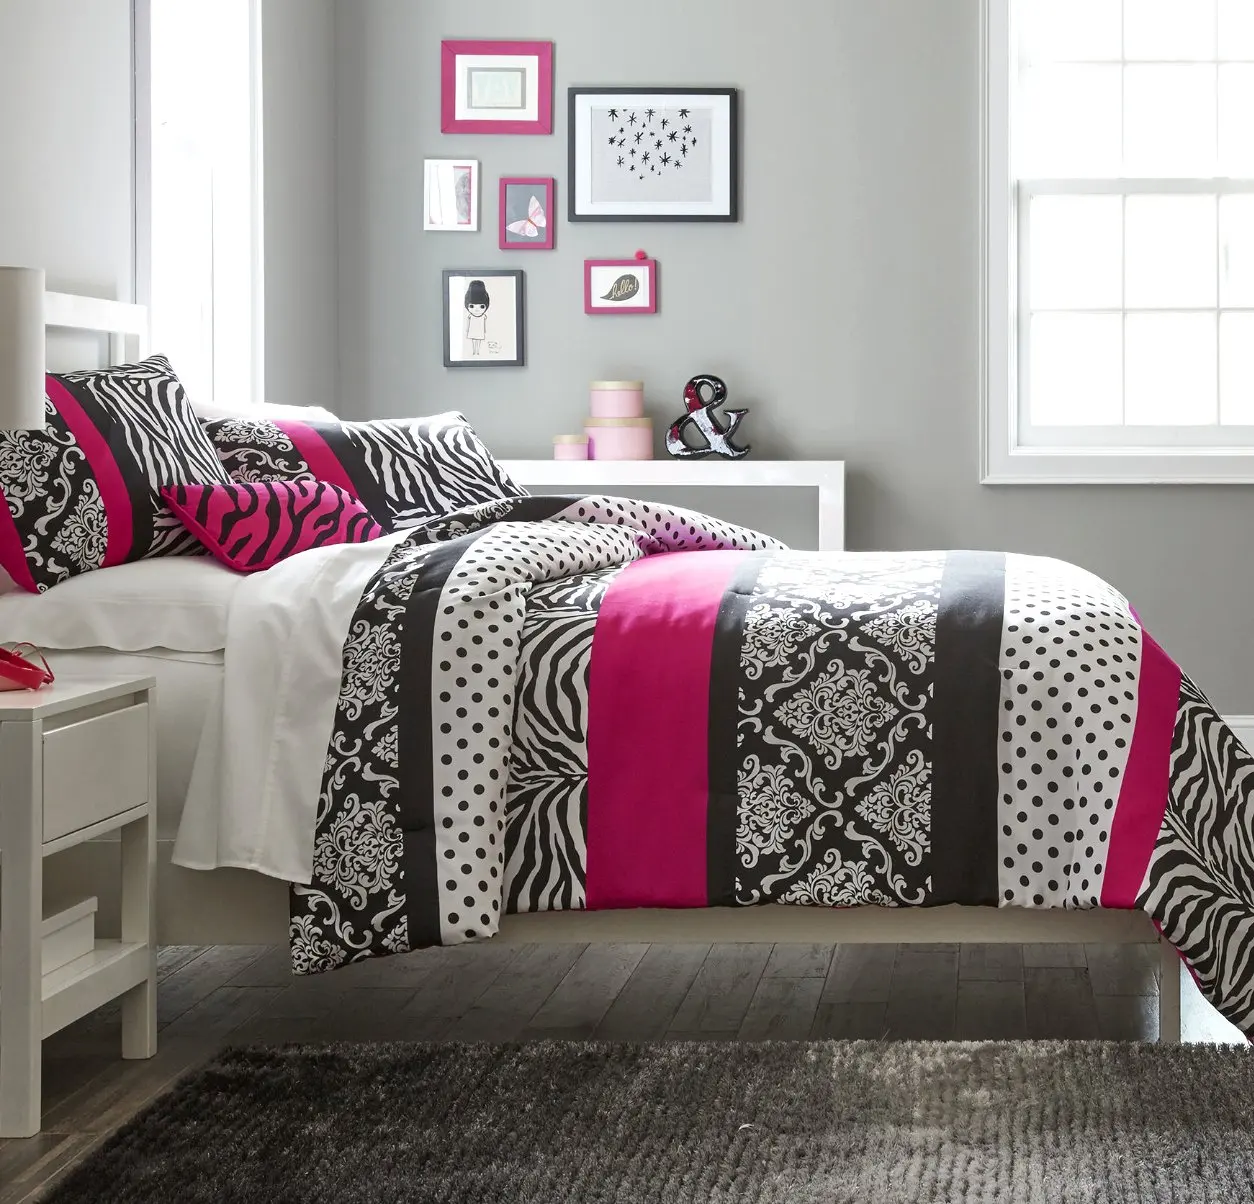 Buy Teen Girl Hot Pink Black White Bedding Comforter Damask Zebra Queen Bedspread Set 2 Shams Adorable Throw Pillow Home Style Sleep Mask Polka Dot Fuchsia Paris Comforters Sets